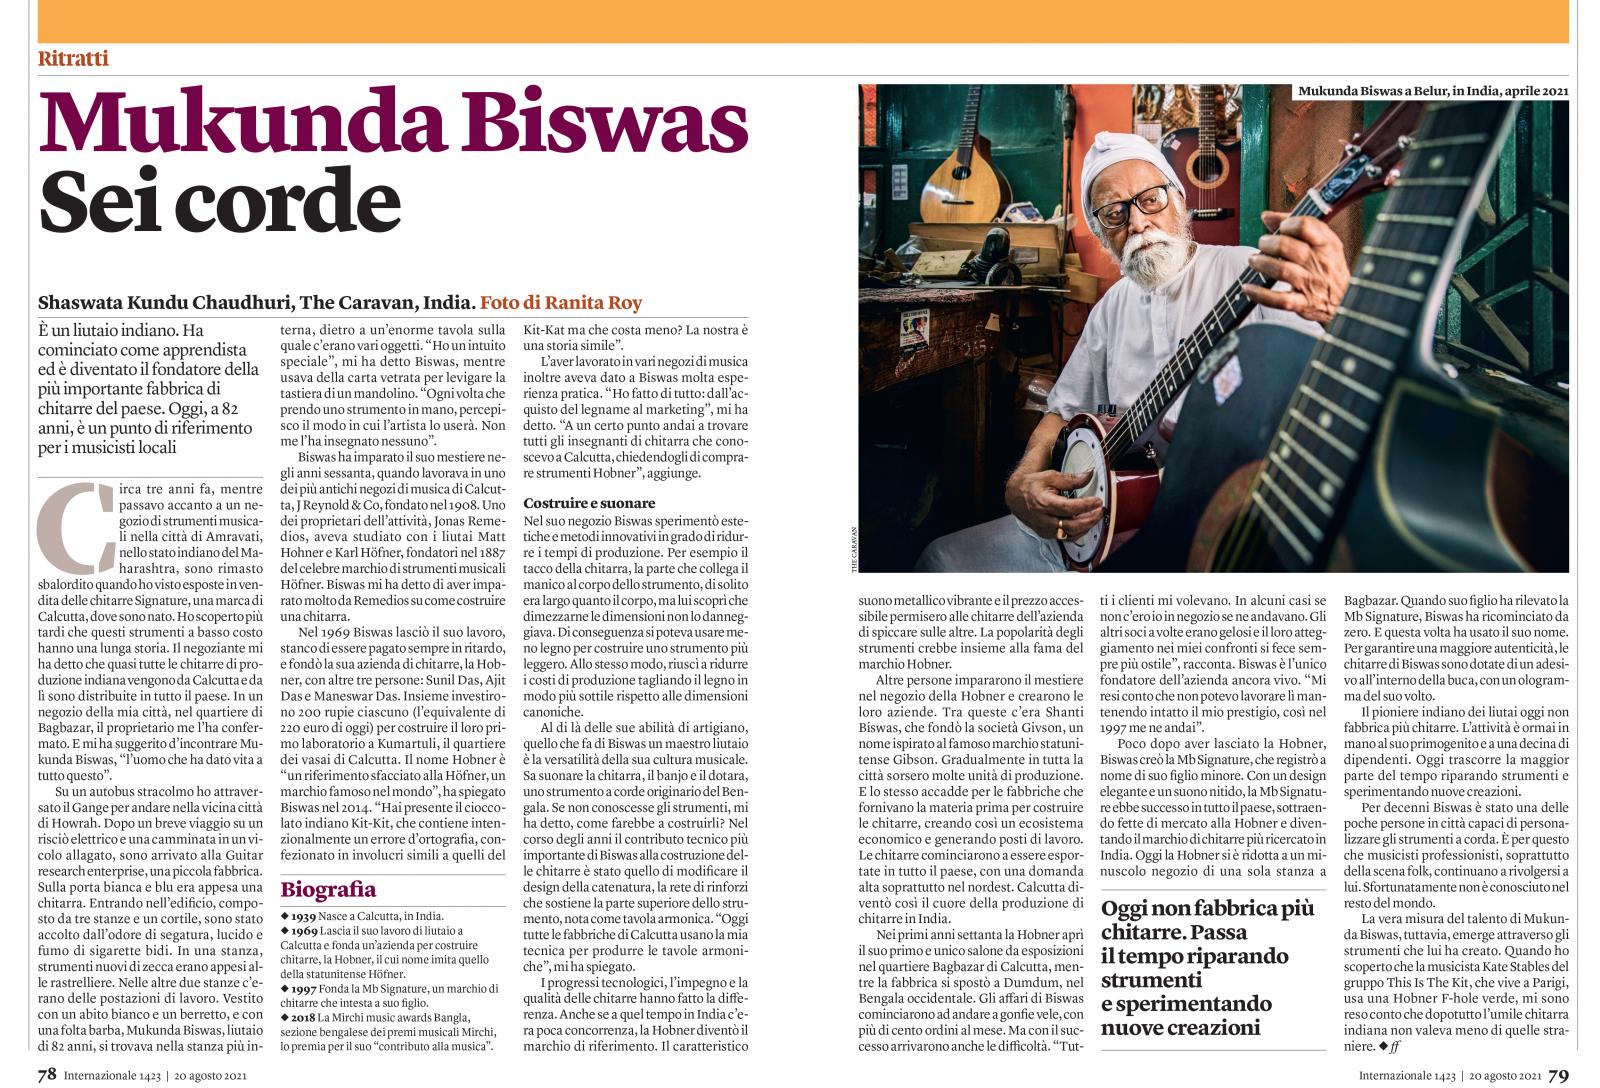 Thumbnail of Internazionale Magazine_ Biswas  Sei corde